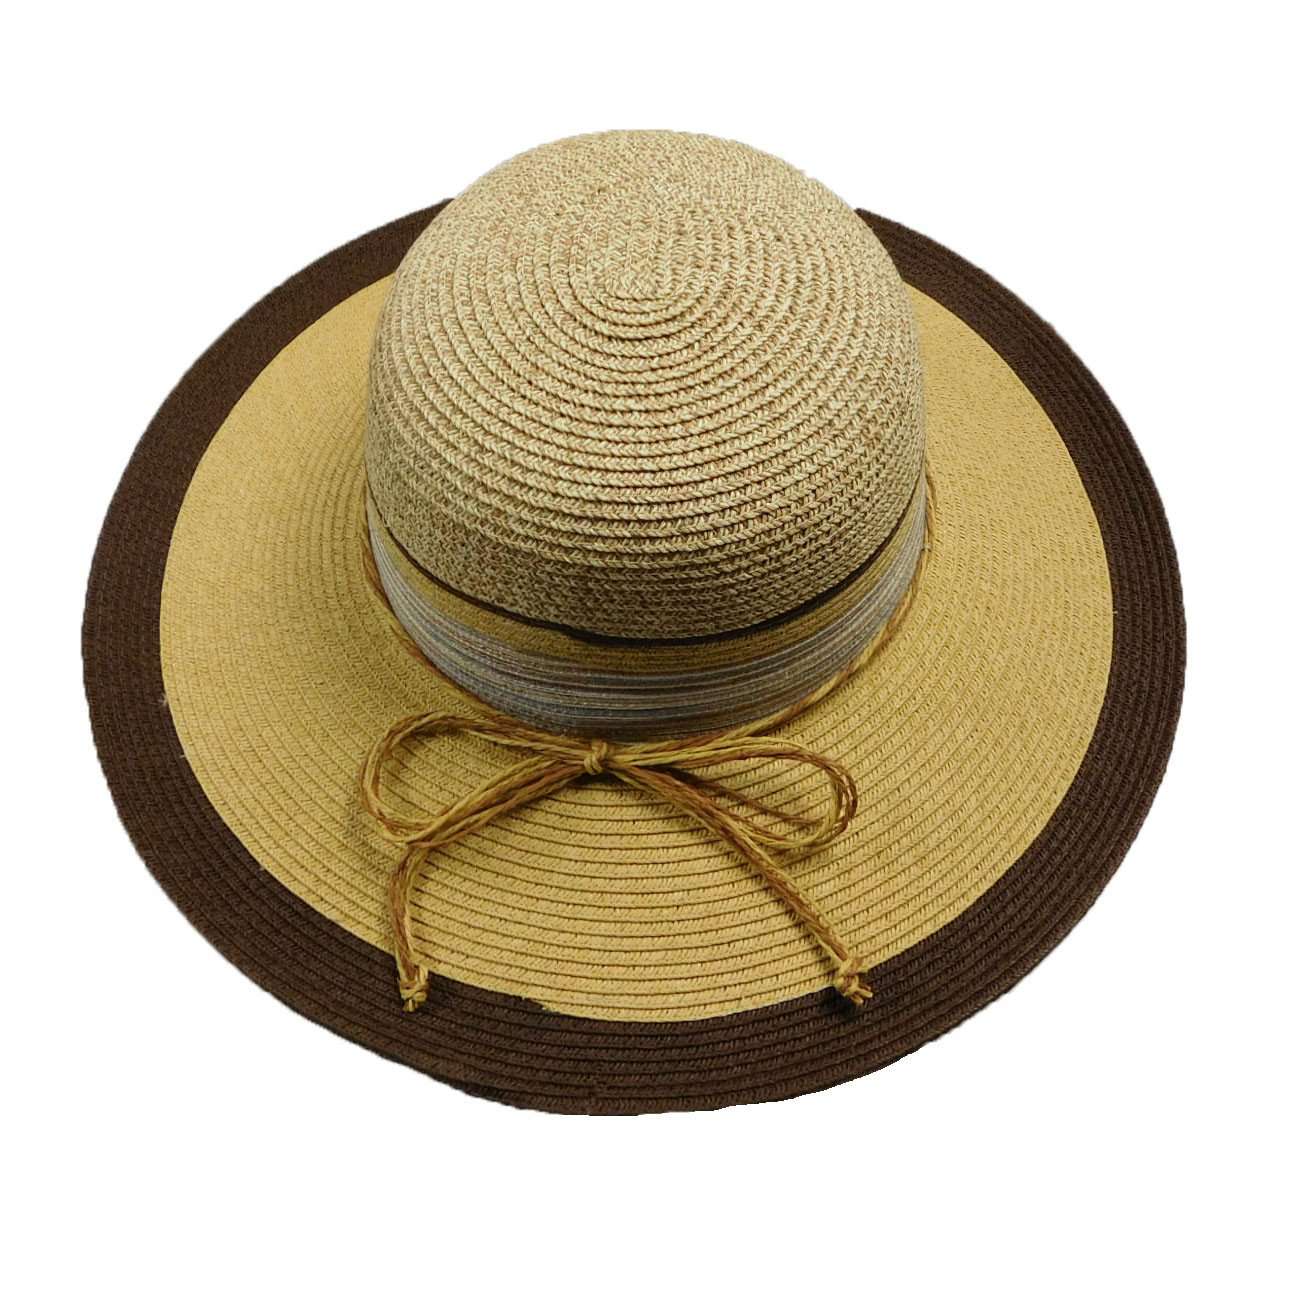 Karen Keith Multi Tone Sun Hat Floppy Hat Great hats by Karen Keith    